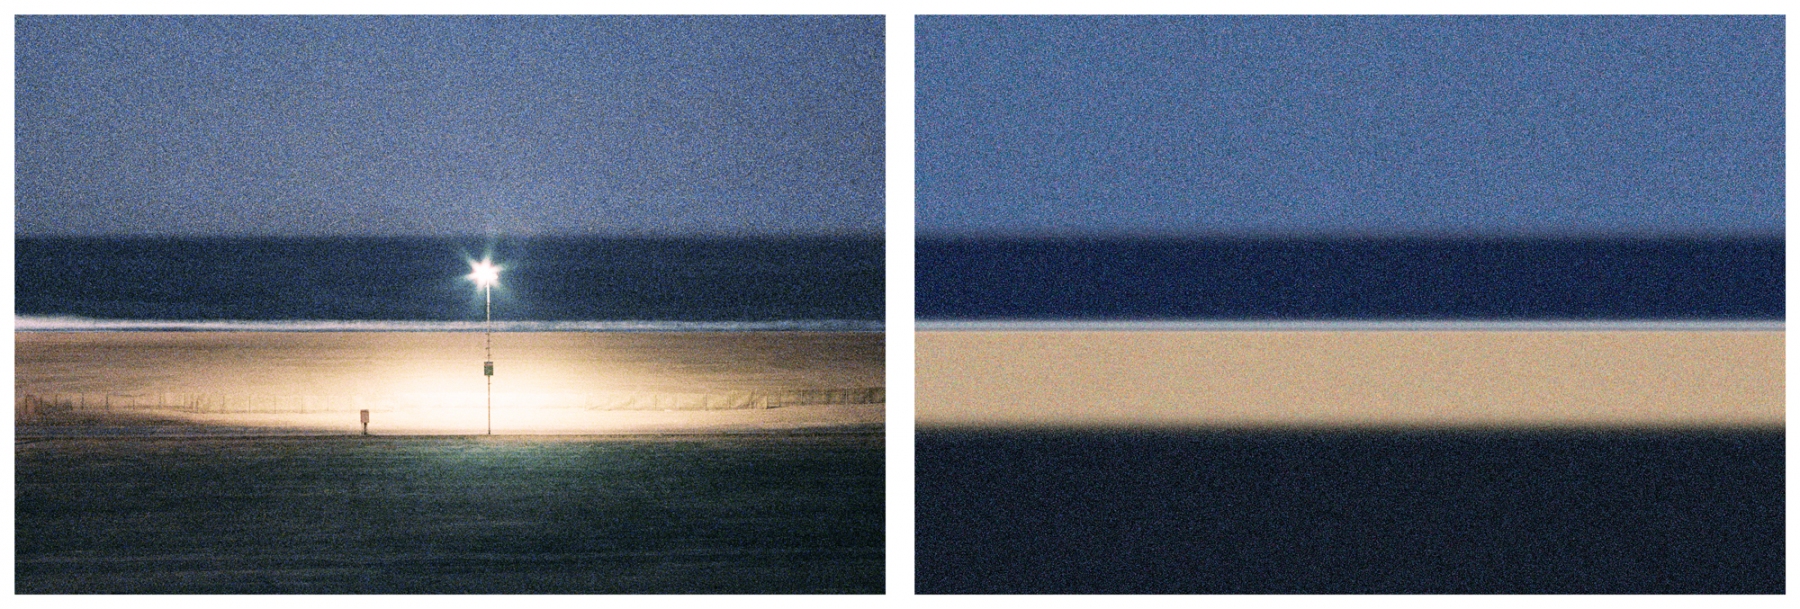 1_reid-swanson-art-1998-2021-photography-light-diptych-01